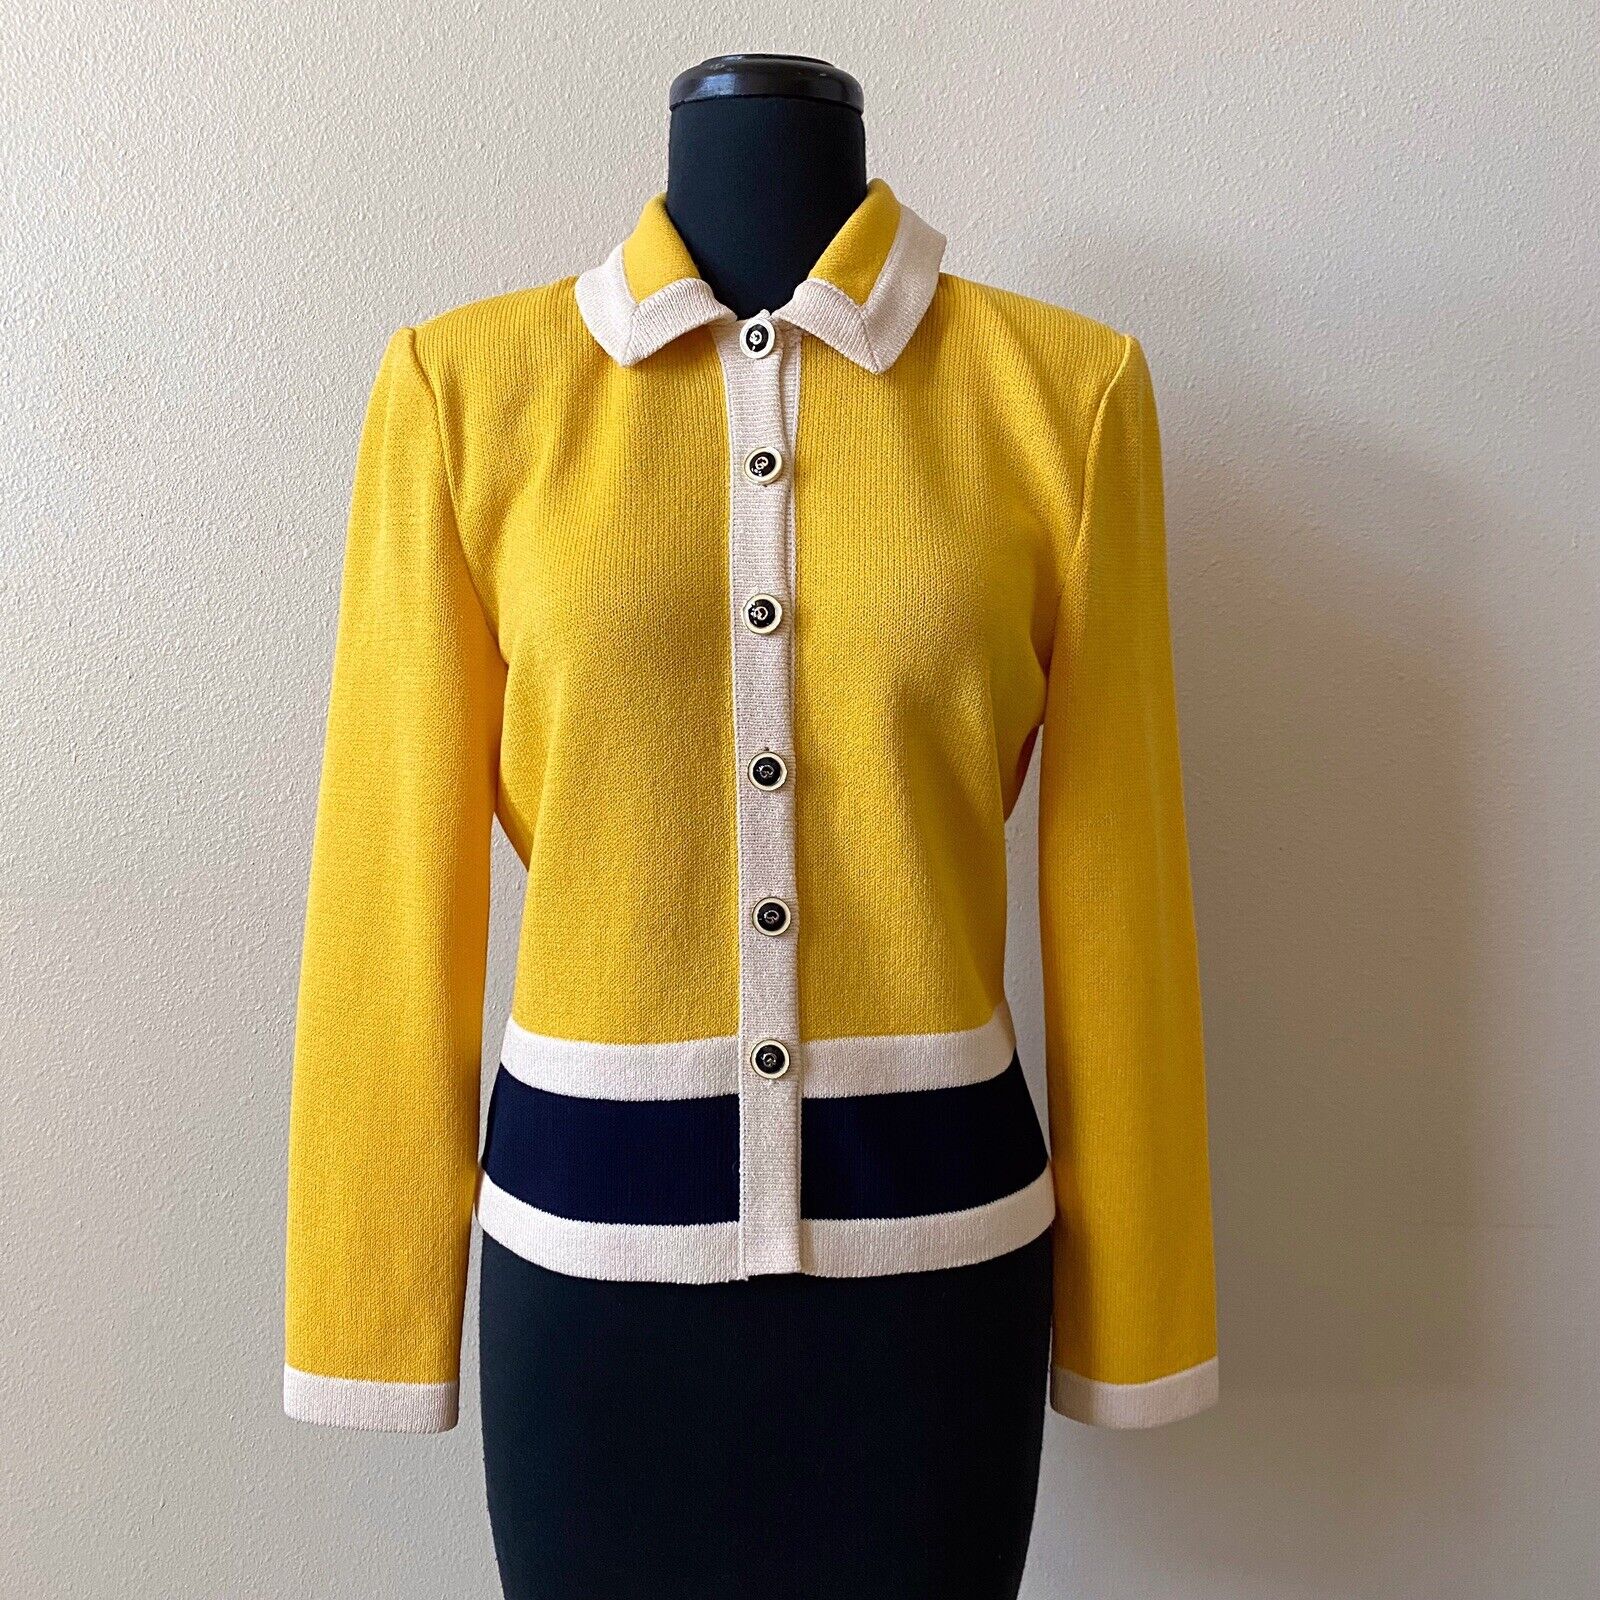 ST. John Button Cardigan Jacket Size 4 Yellow Navy Cream Colorblock Santana Knit